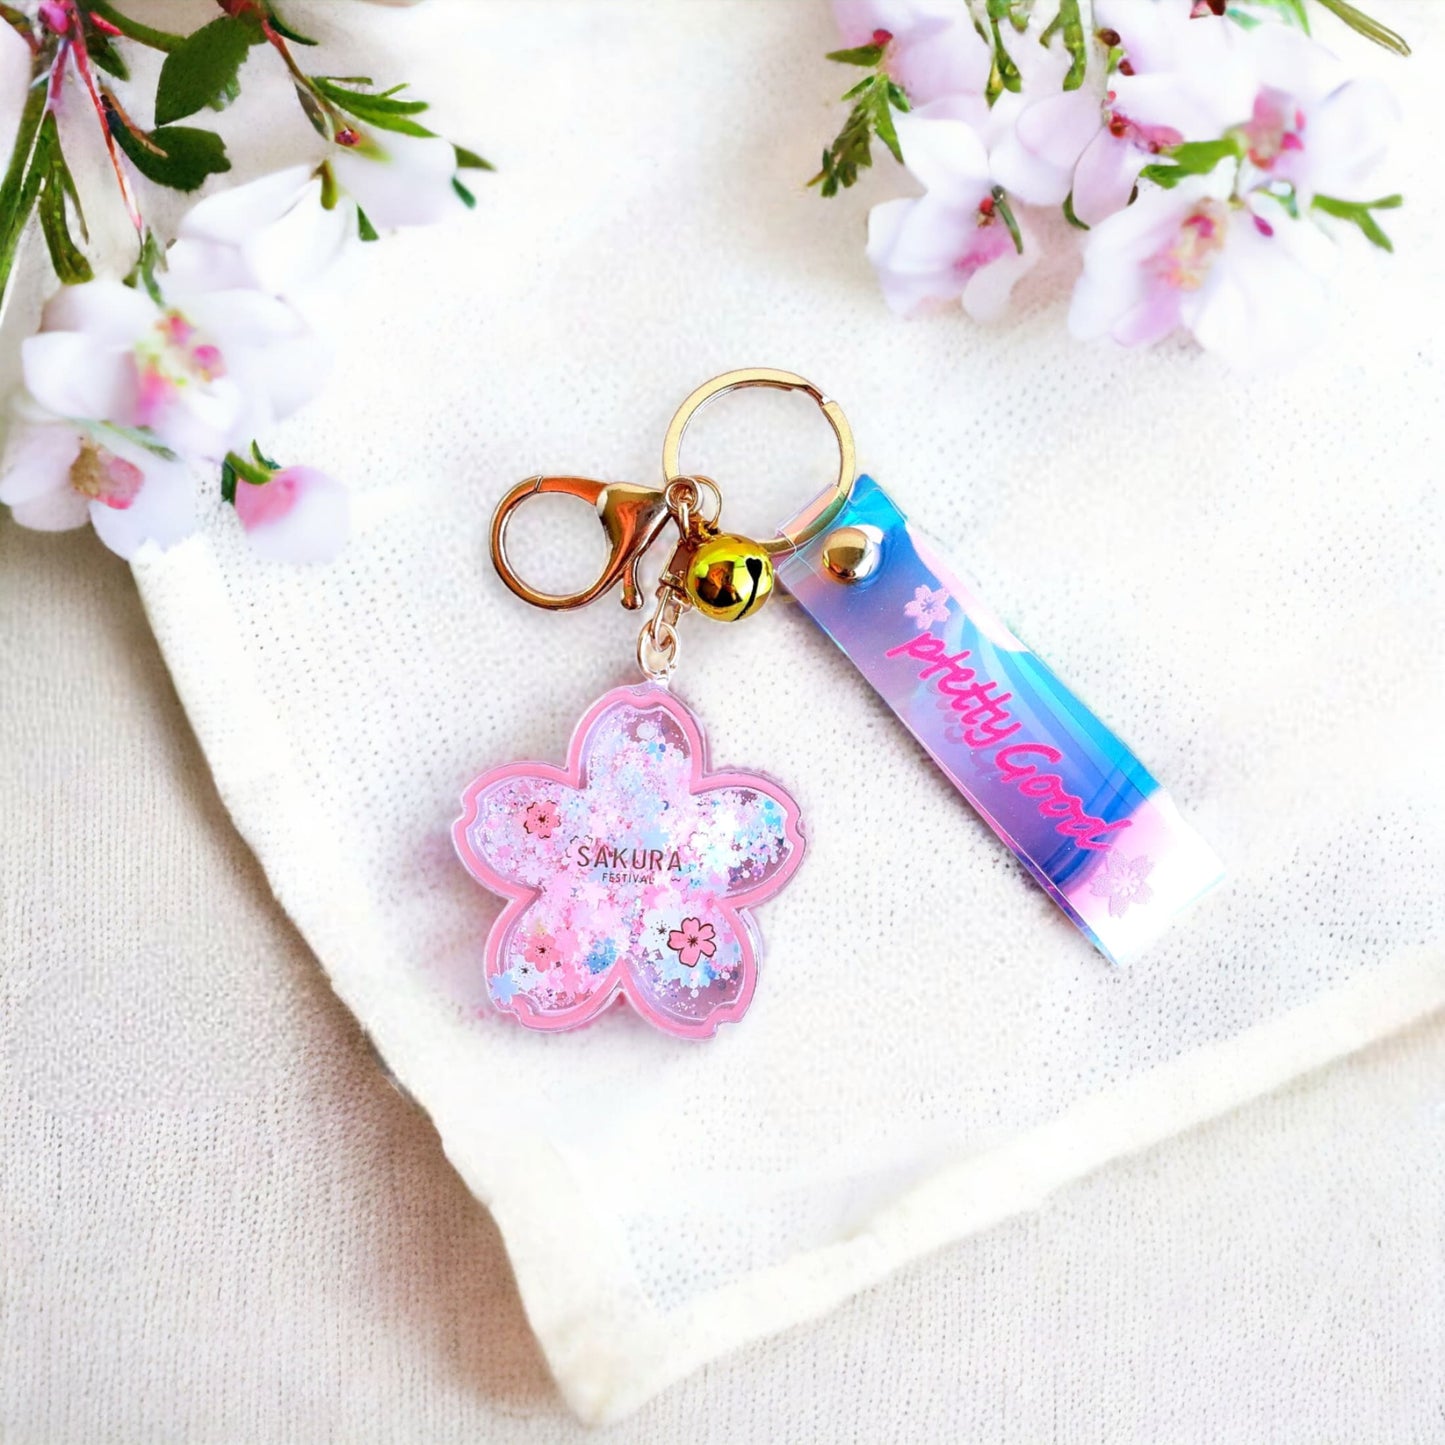 Sakura Liquid Quicksand Bag Charm Keychain from Confetti Kitty, Only 9.99